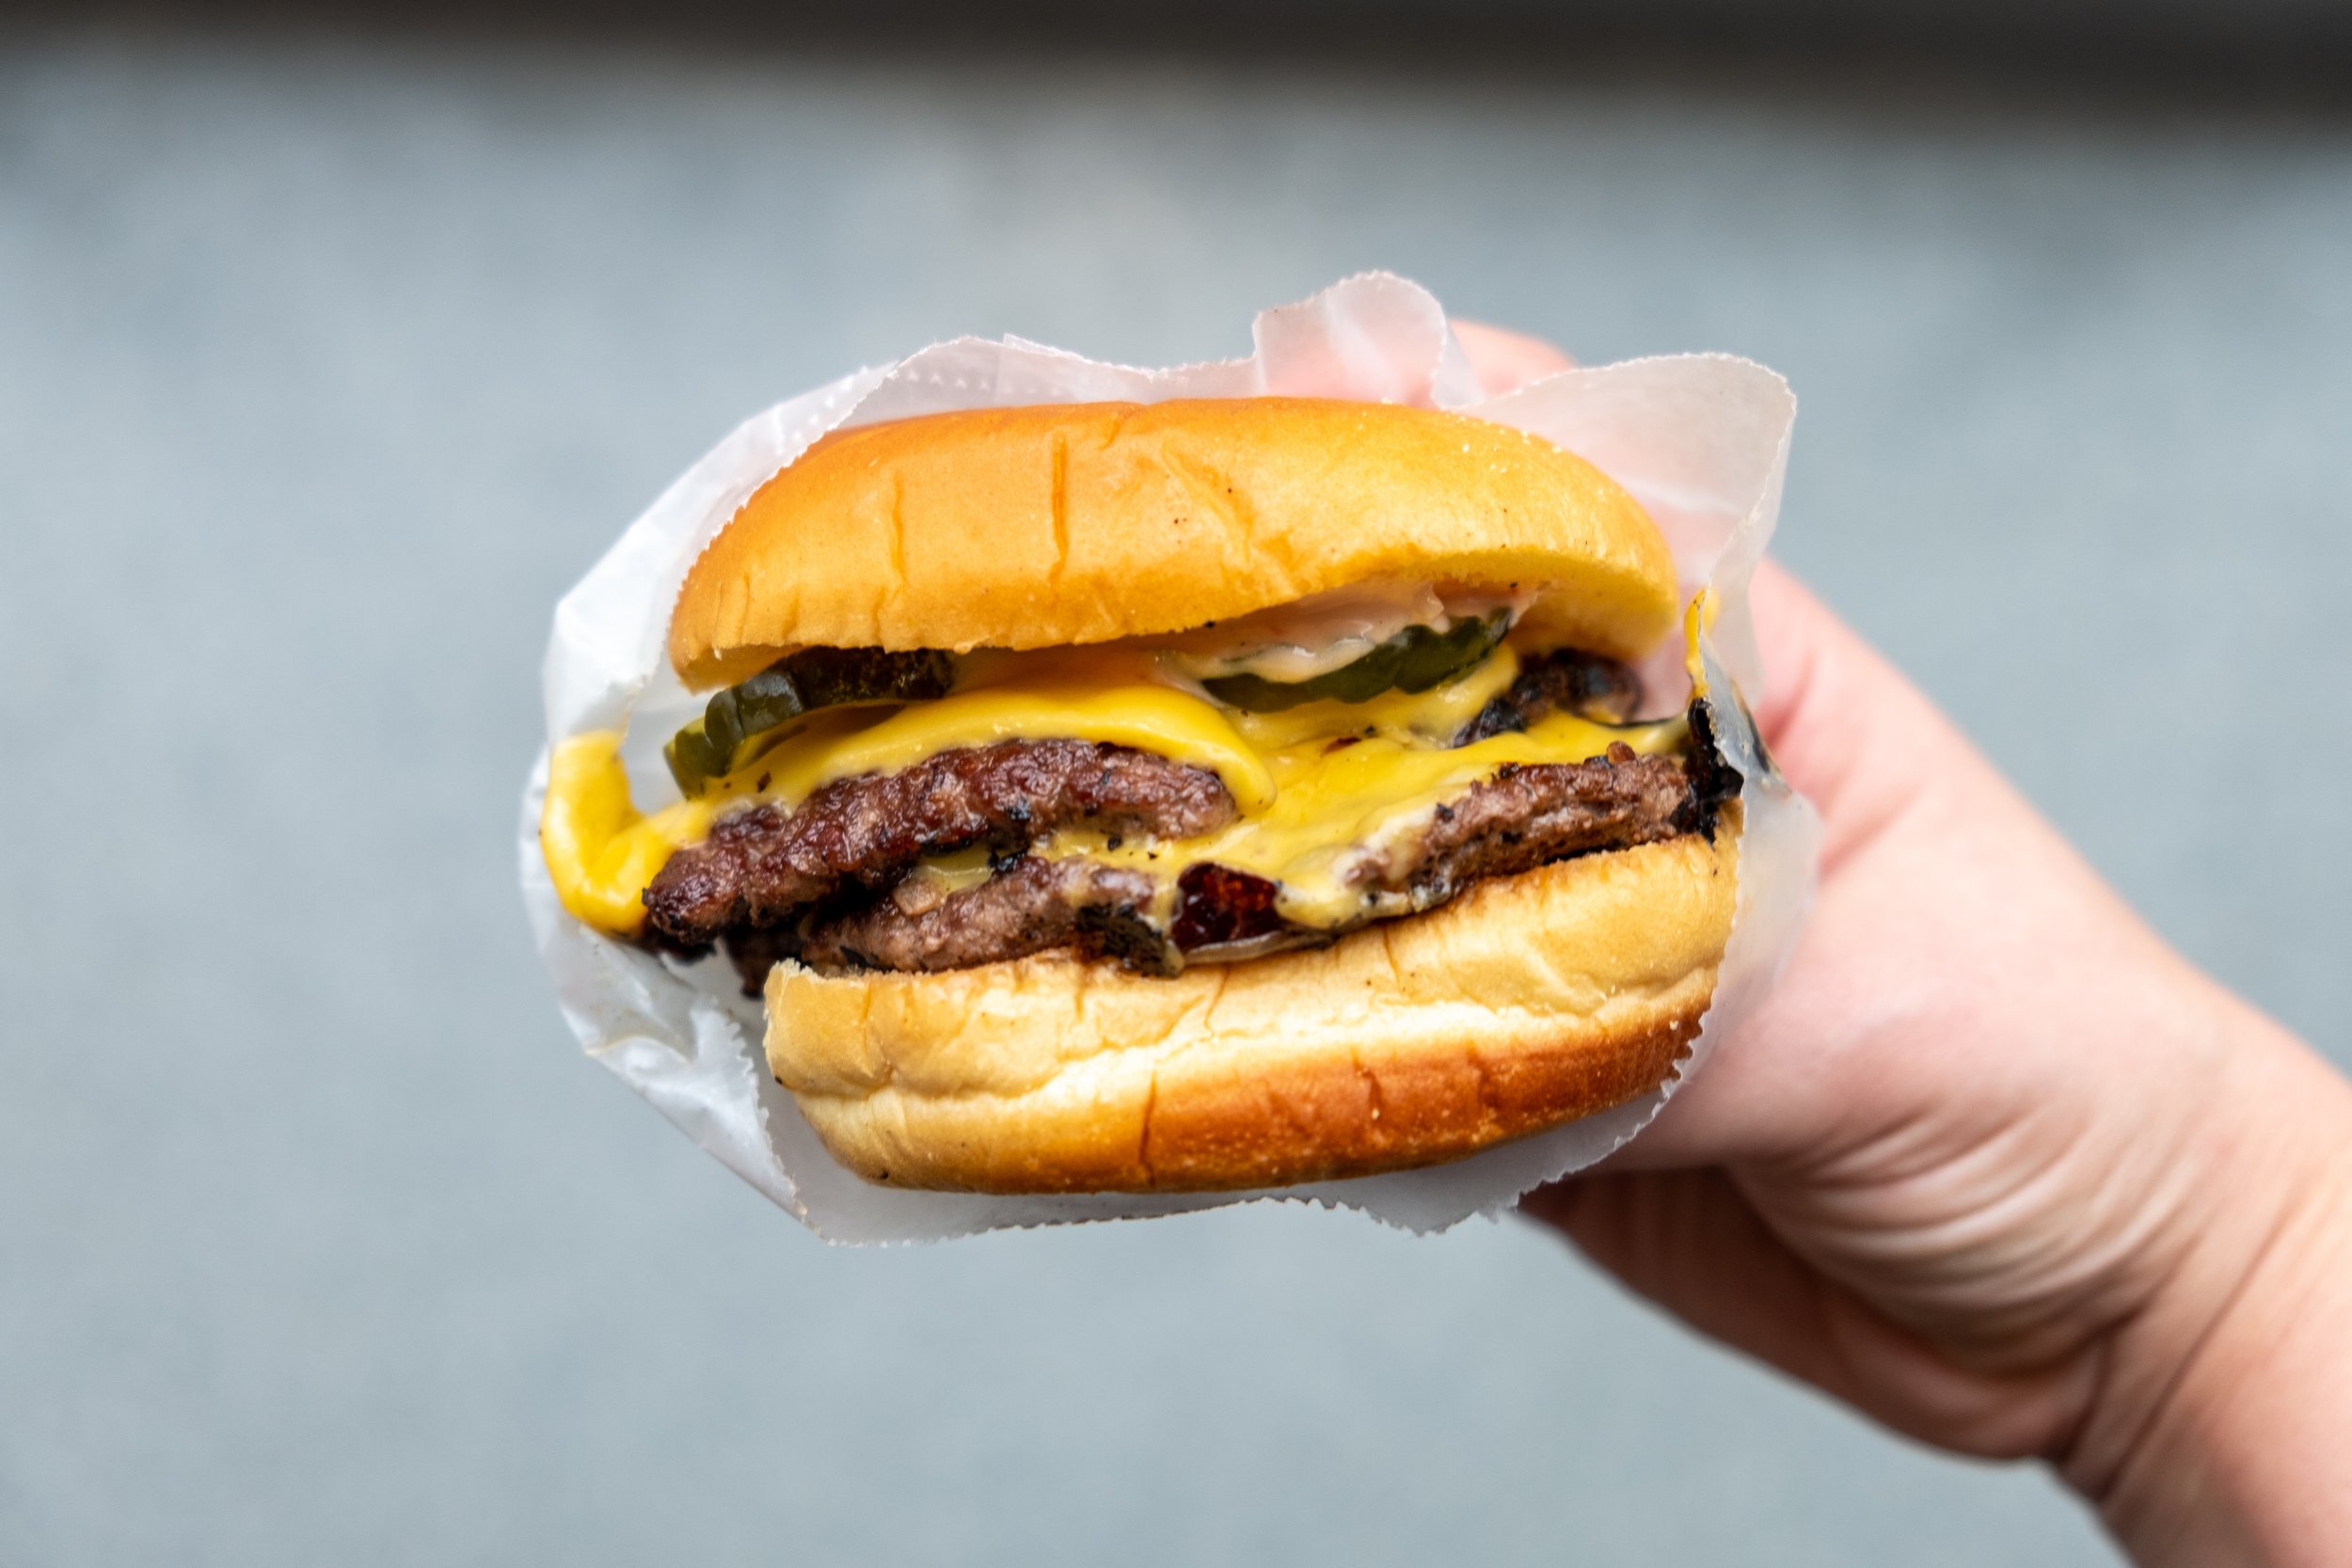  a hand holding a cheeseburger 